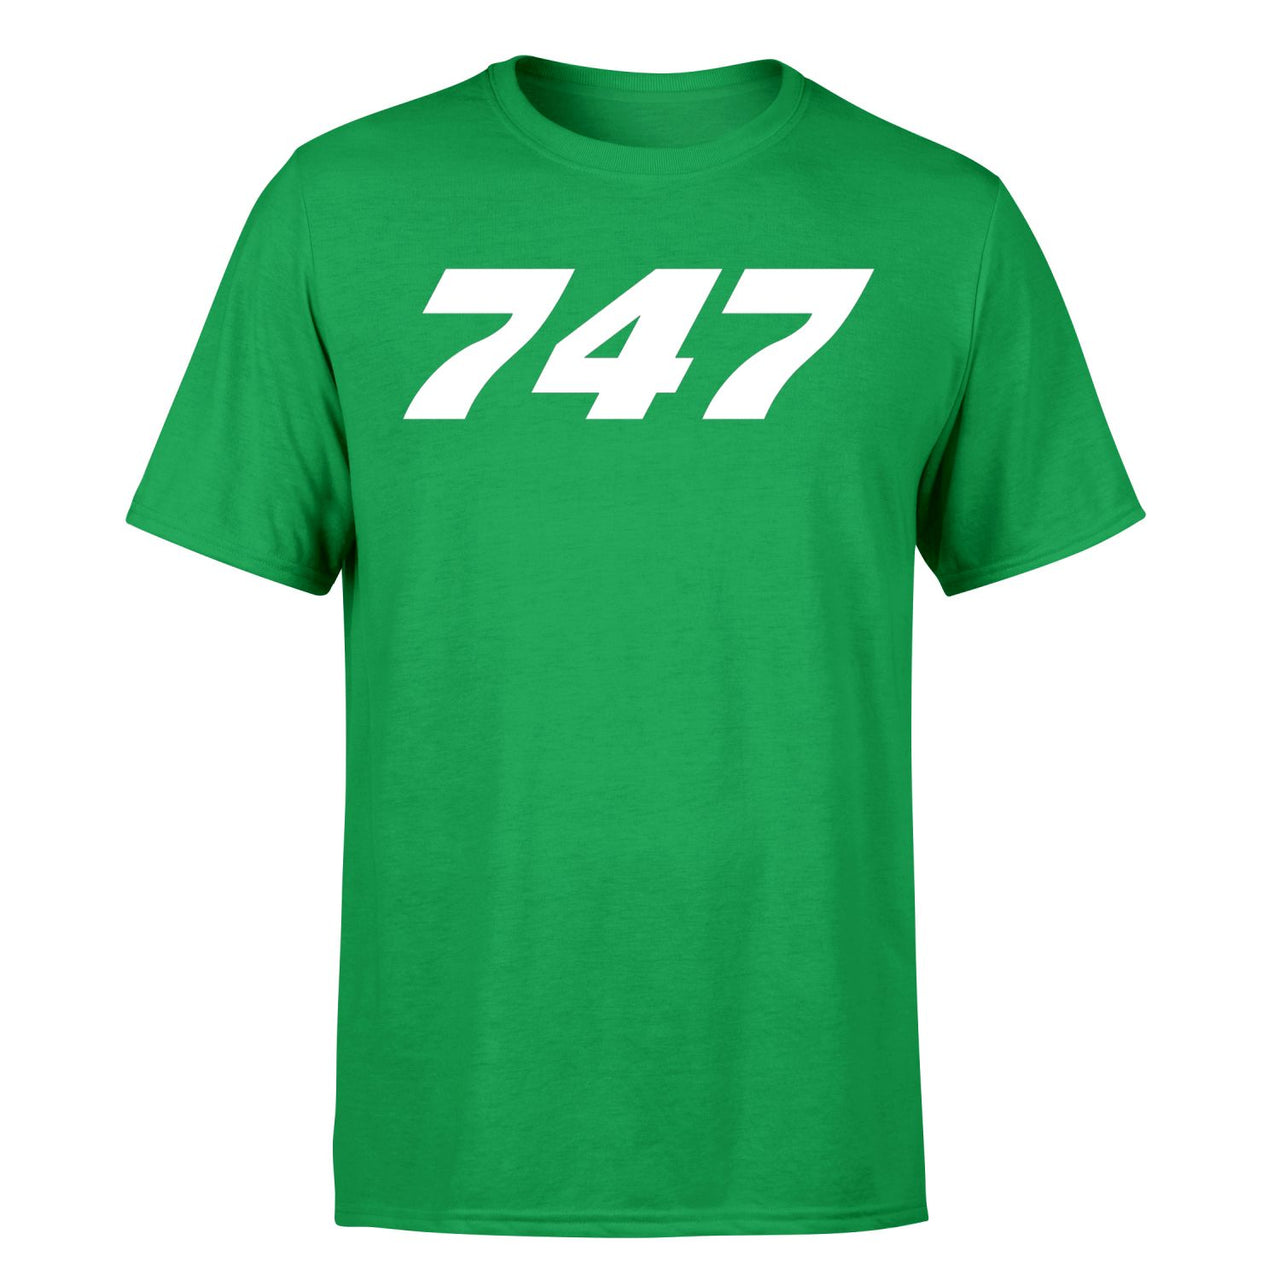 747 Flat Text Designed T-Shirts